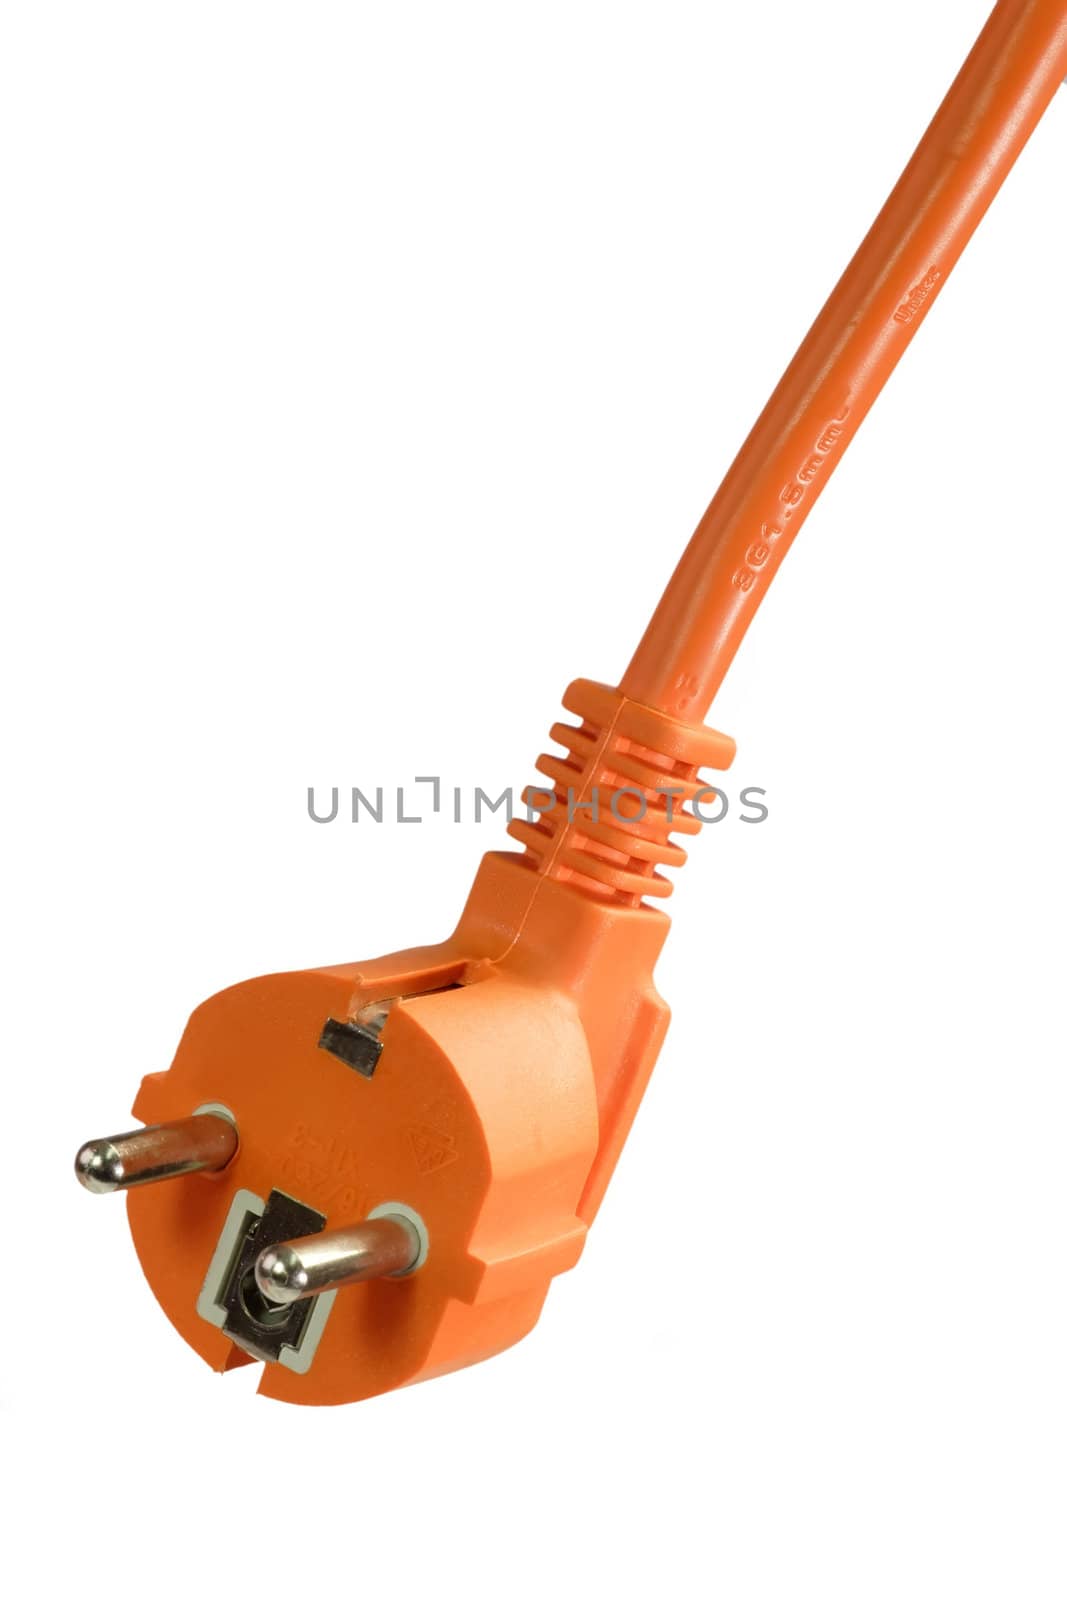 Orange power cable isolated on white background